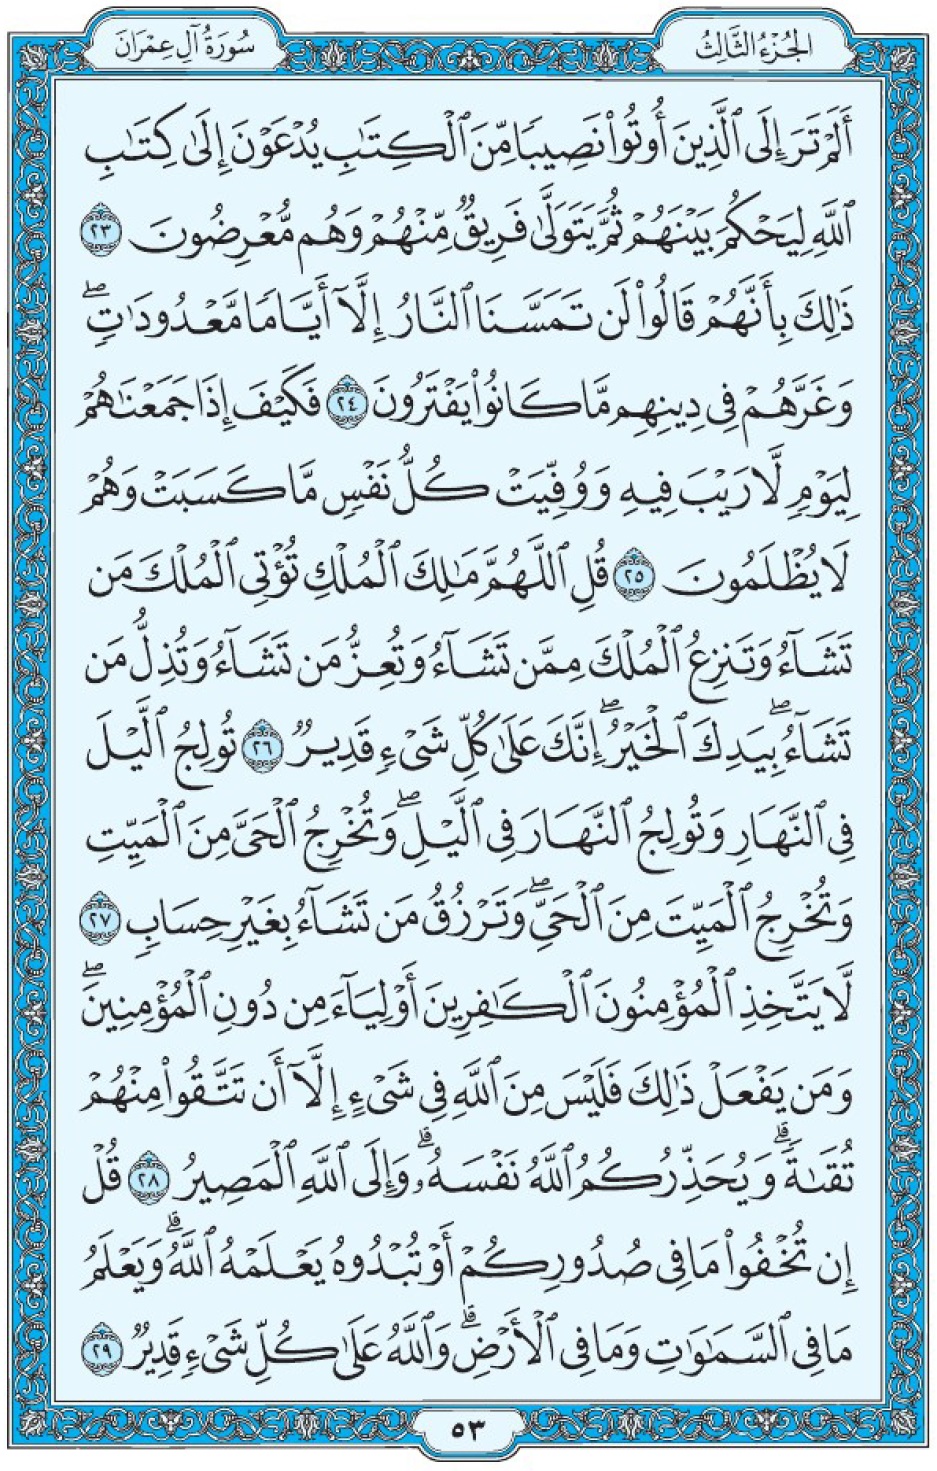 Коран Мединский мусхаф страница 53, Али Имран, аят 23-29